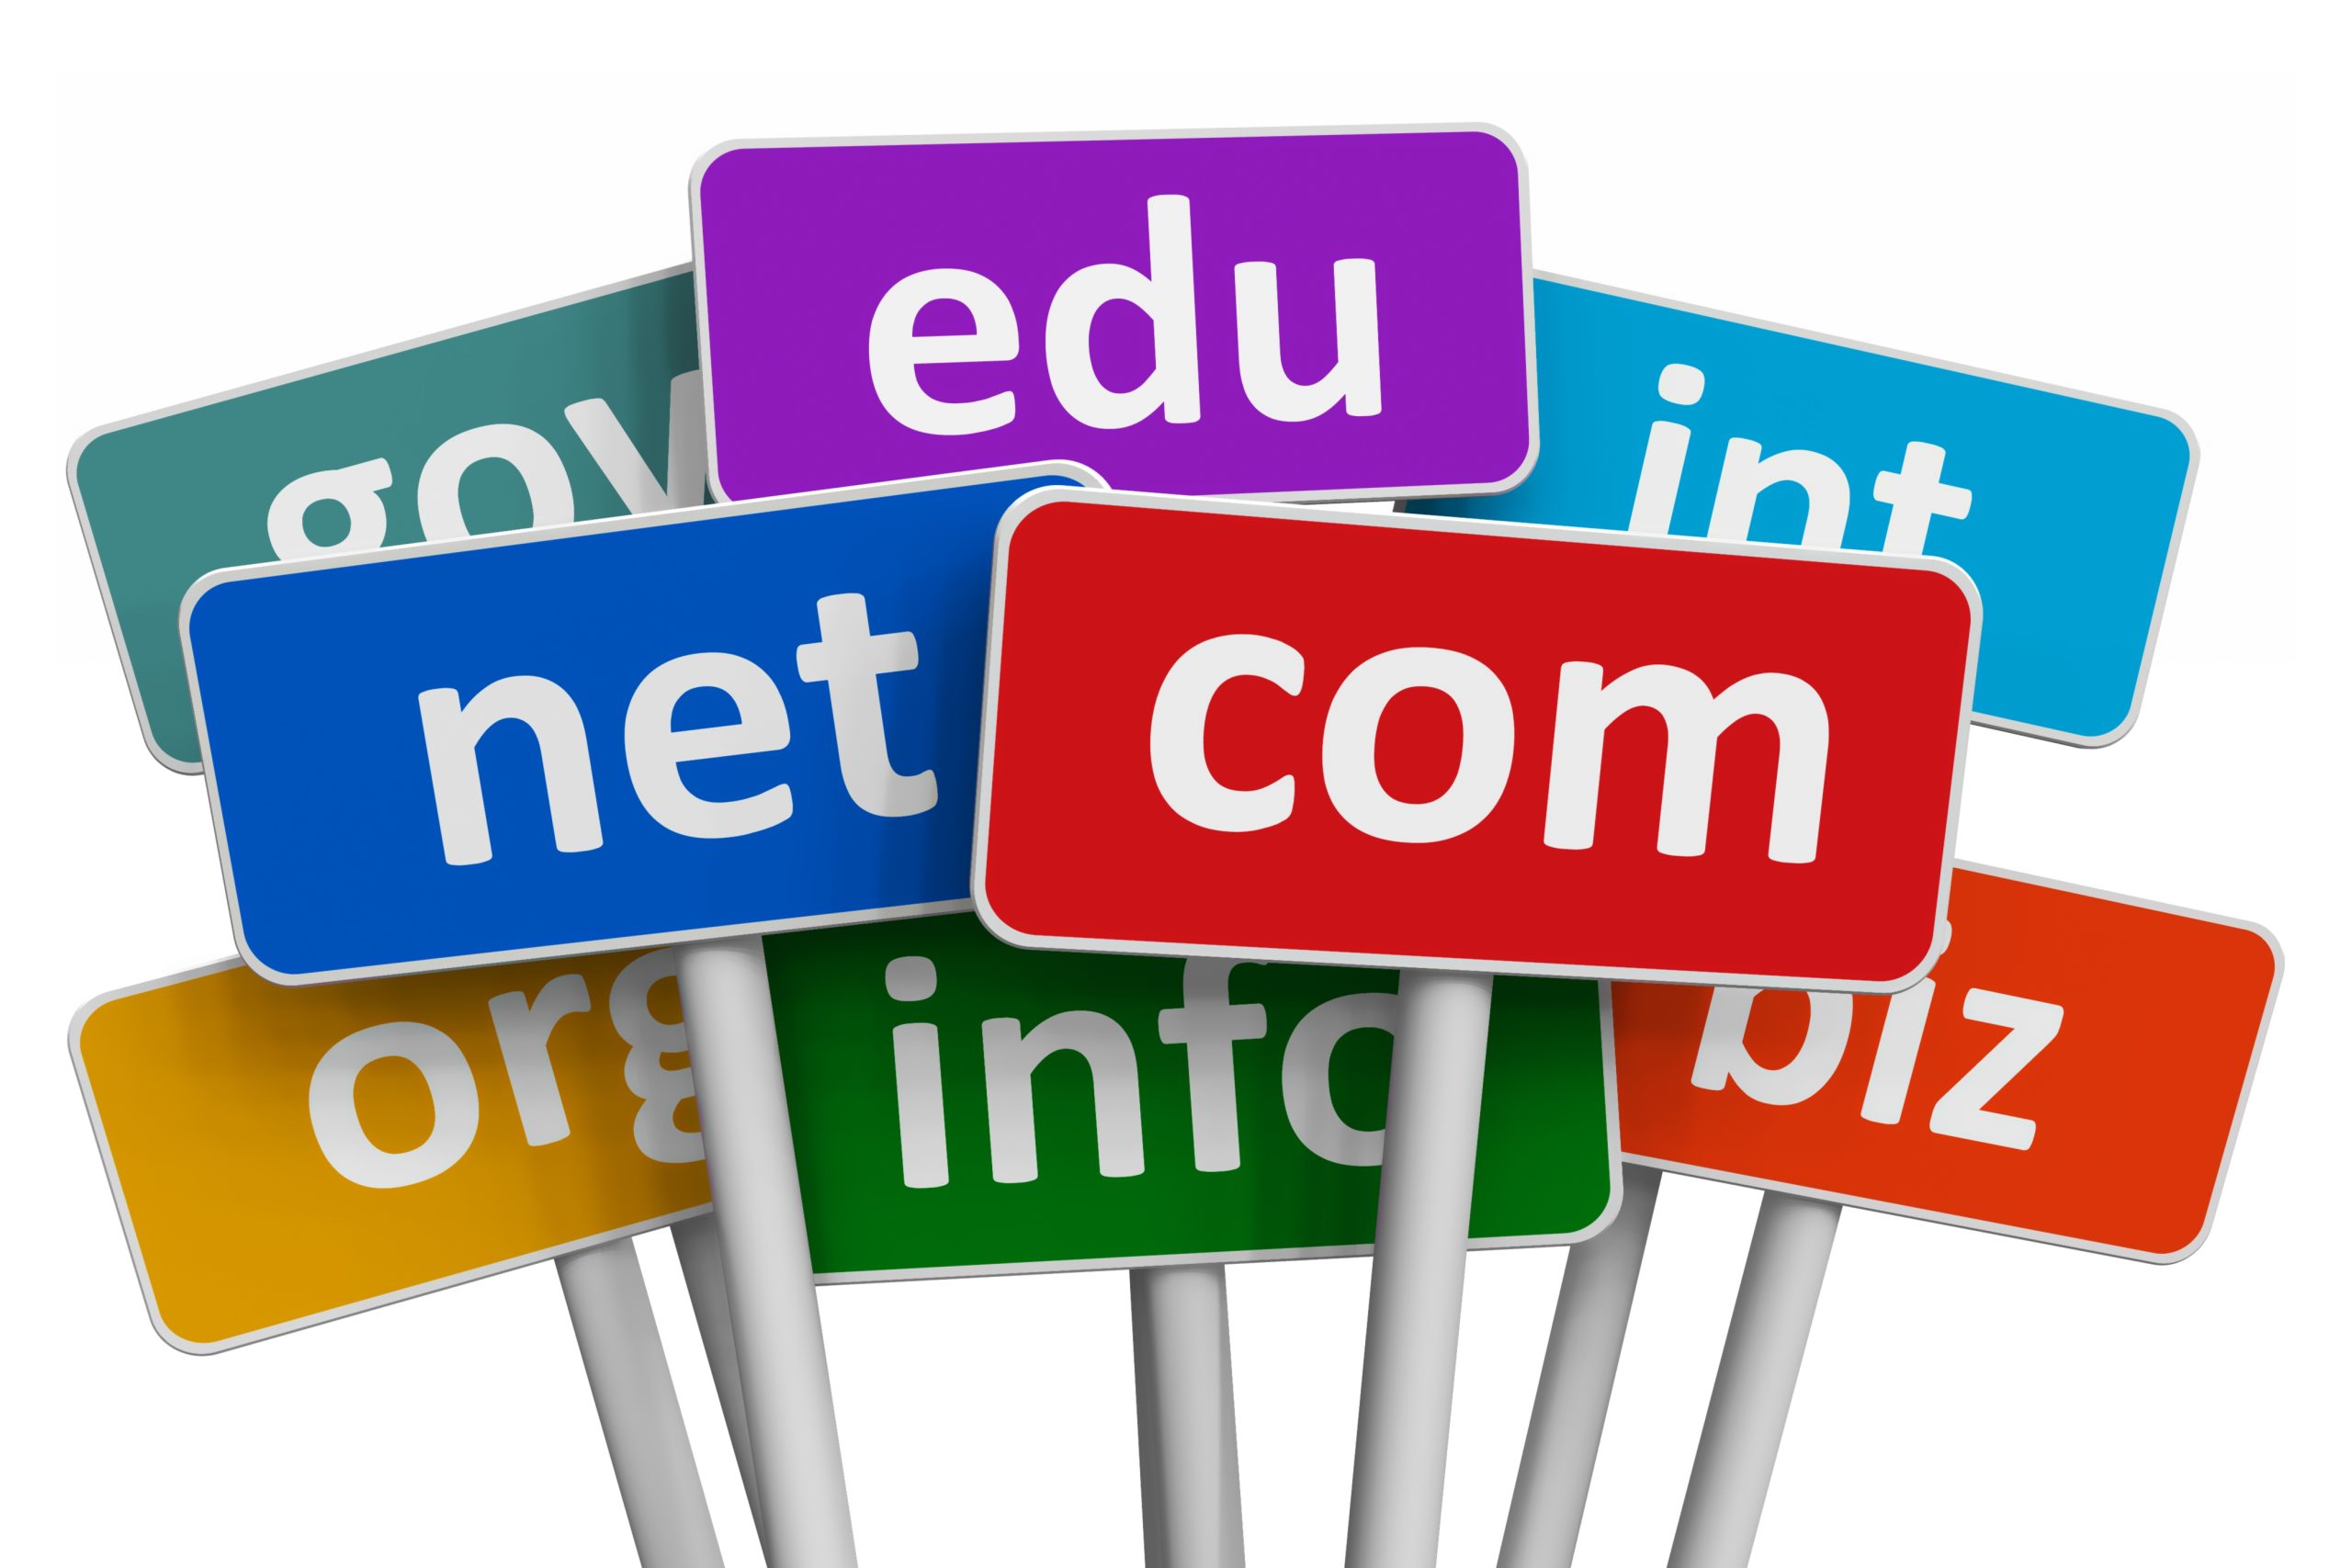 bigstock-Domain-names-and-internet-conc-20750015-1